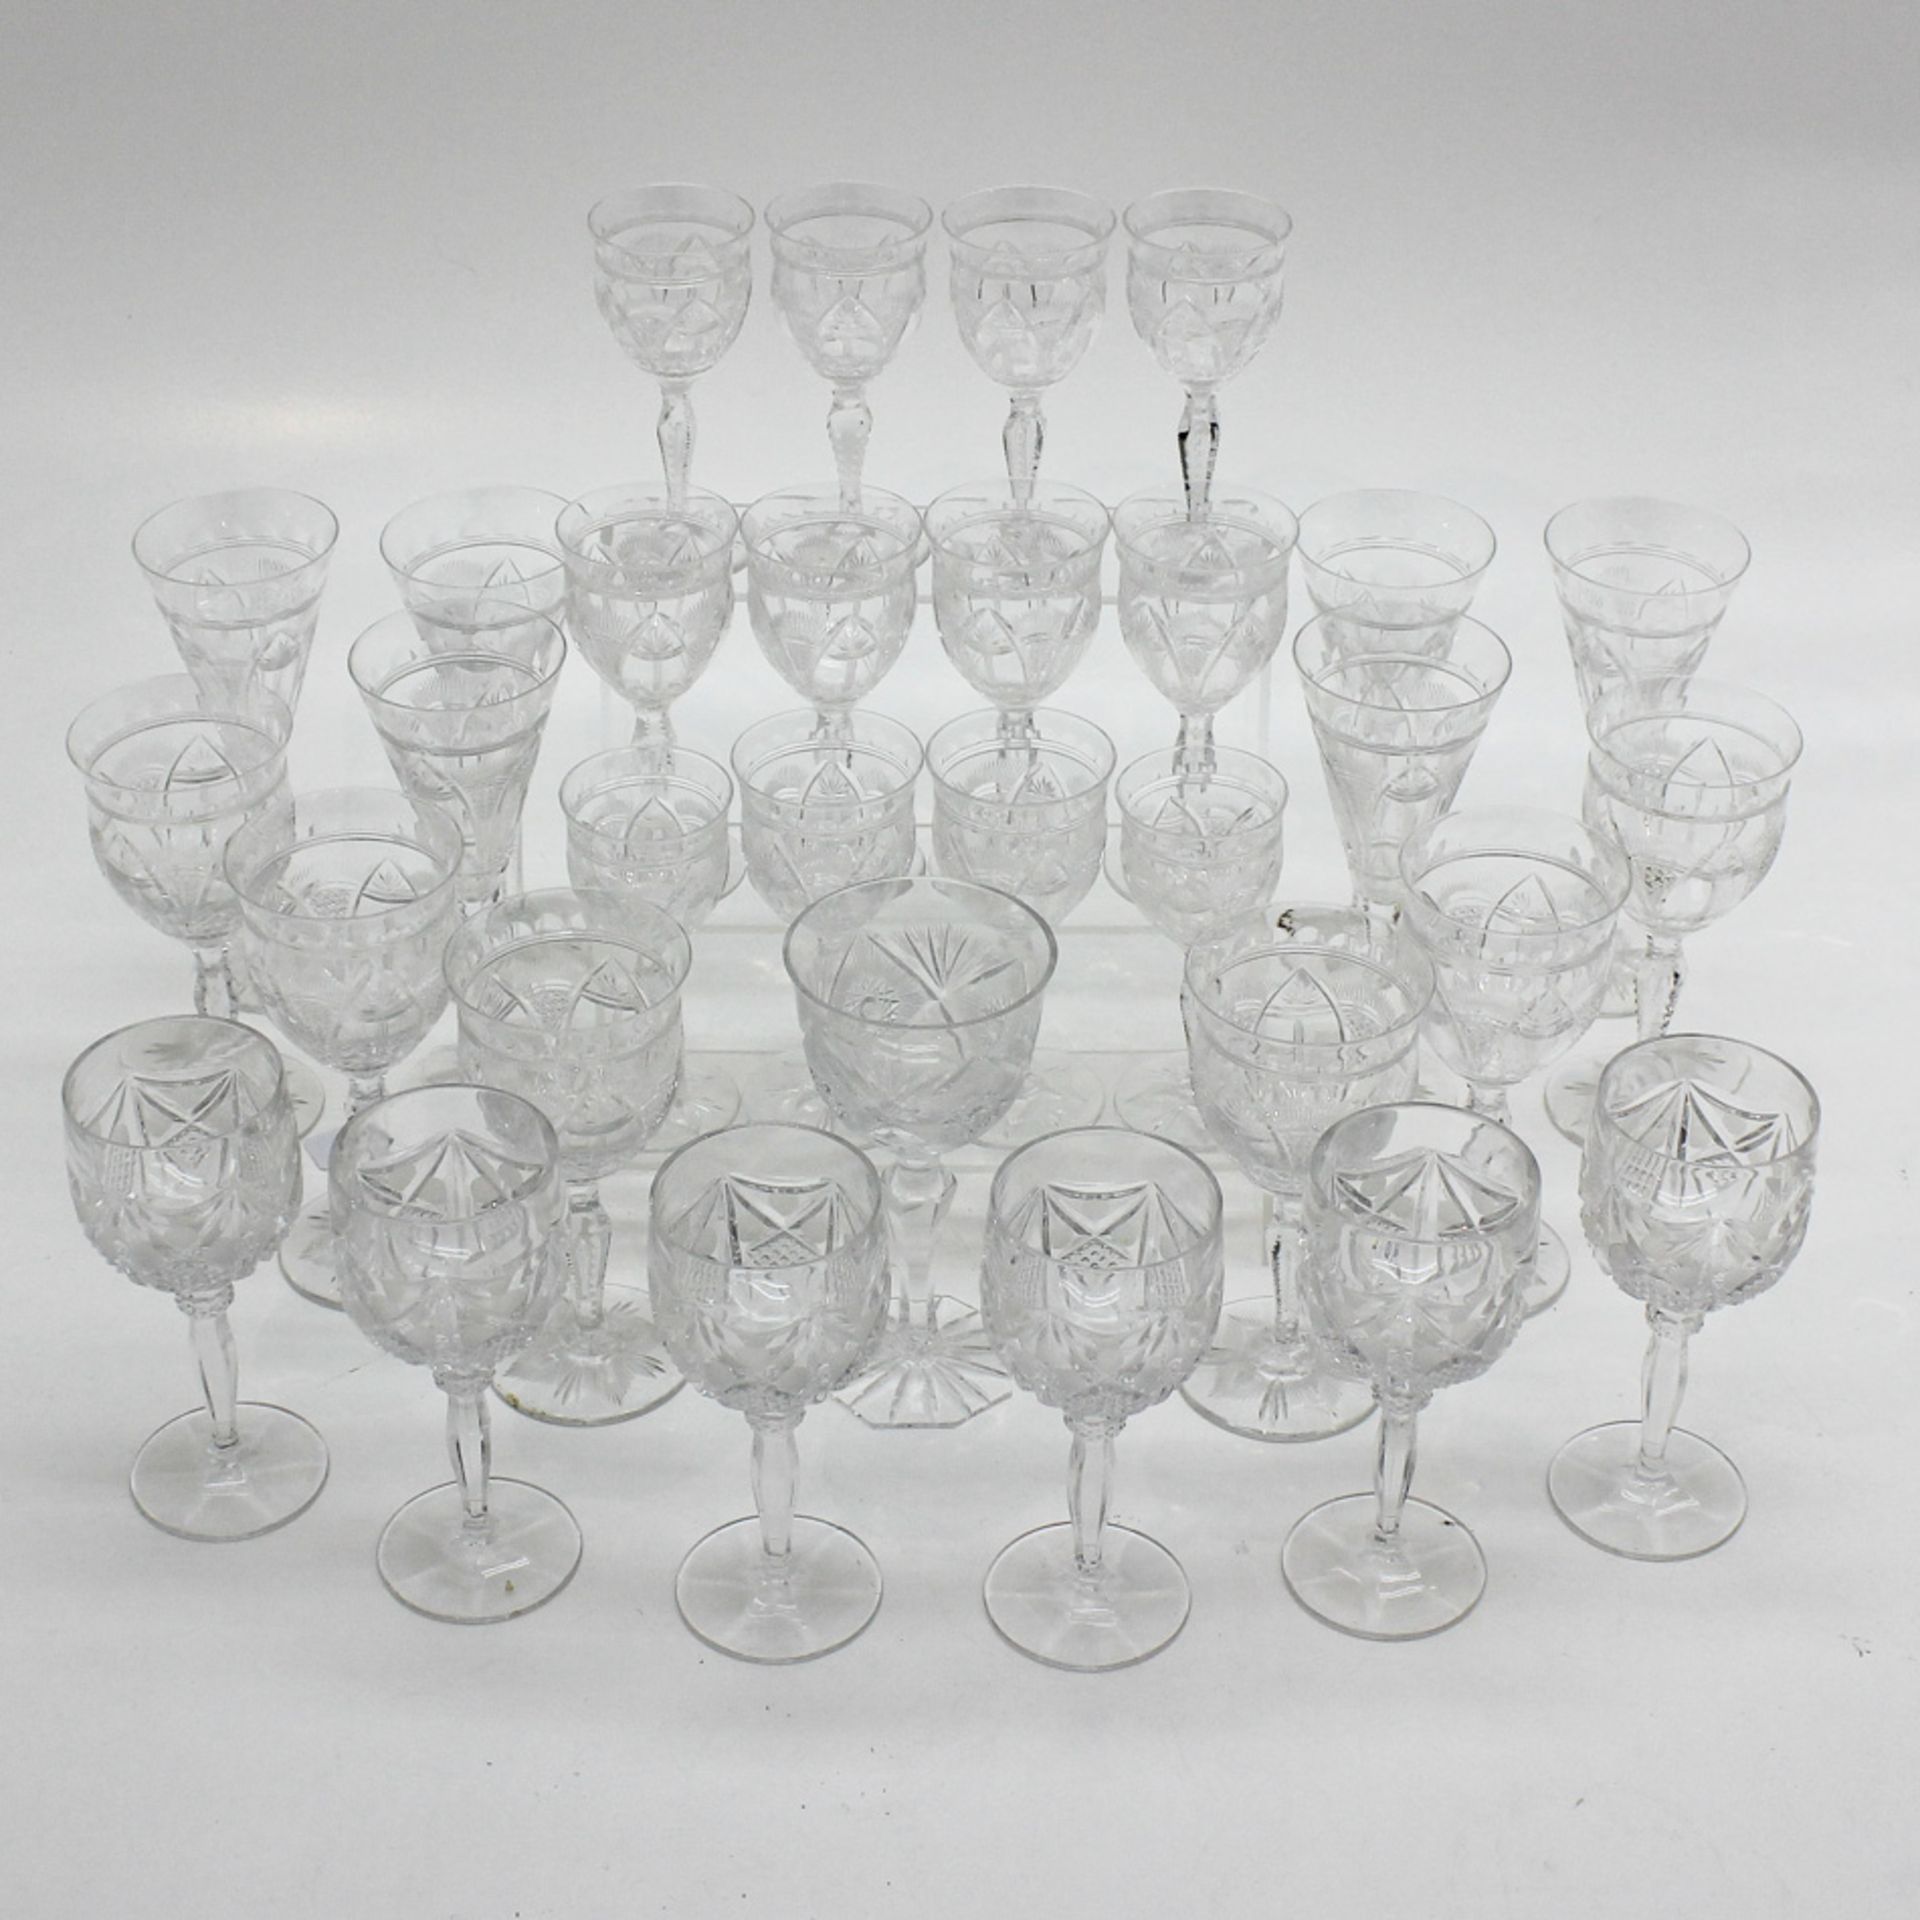 Lot of 31 Stemmed Fine Cut Crystal Glasses Largest measures 20 cm tall.